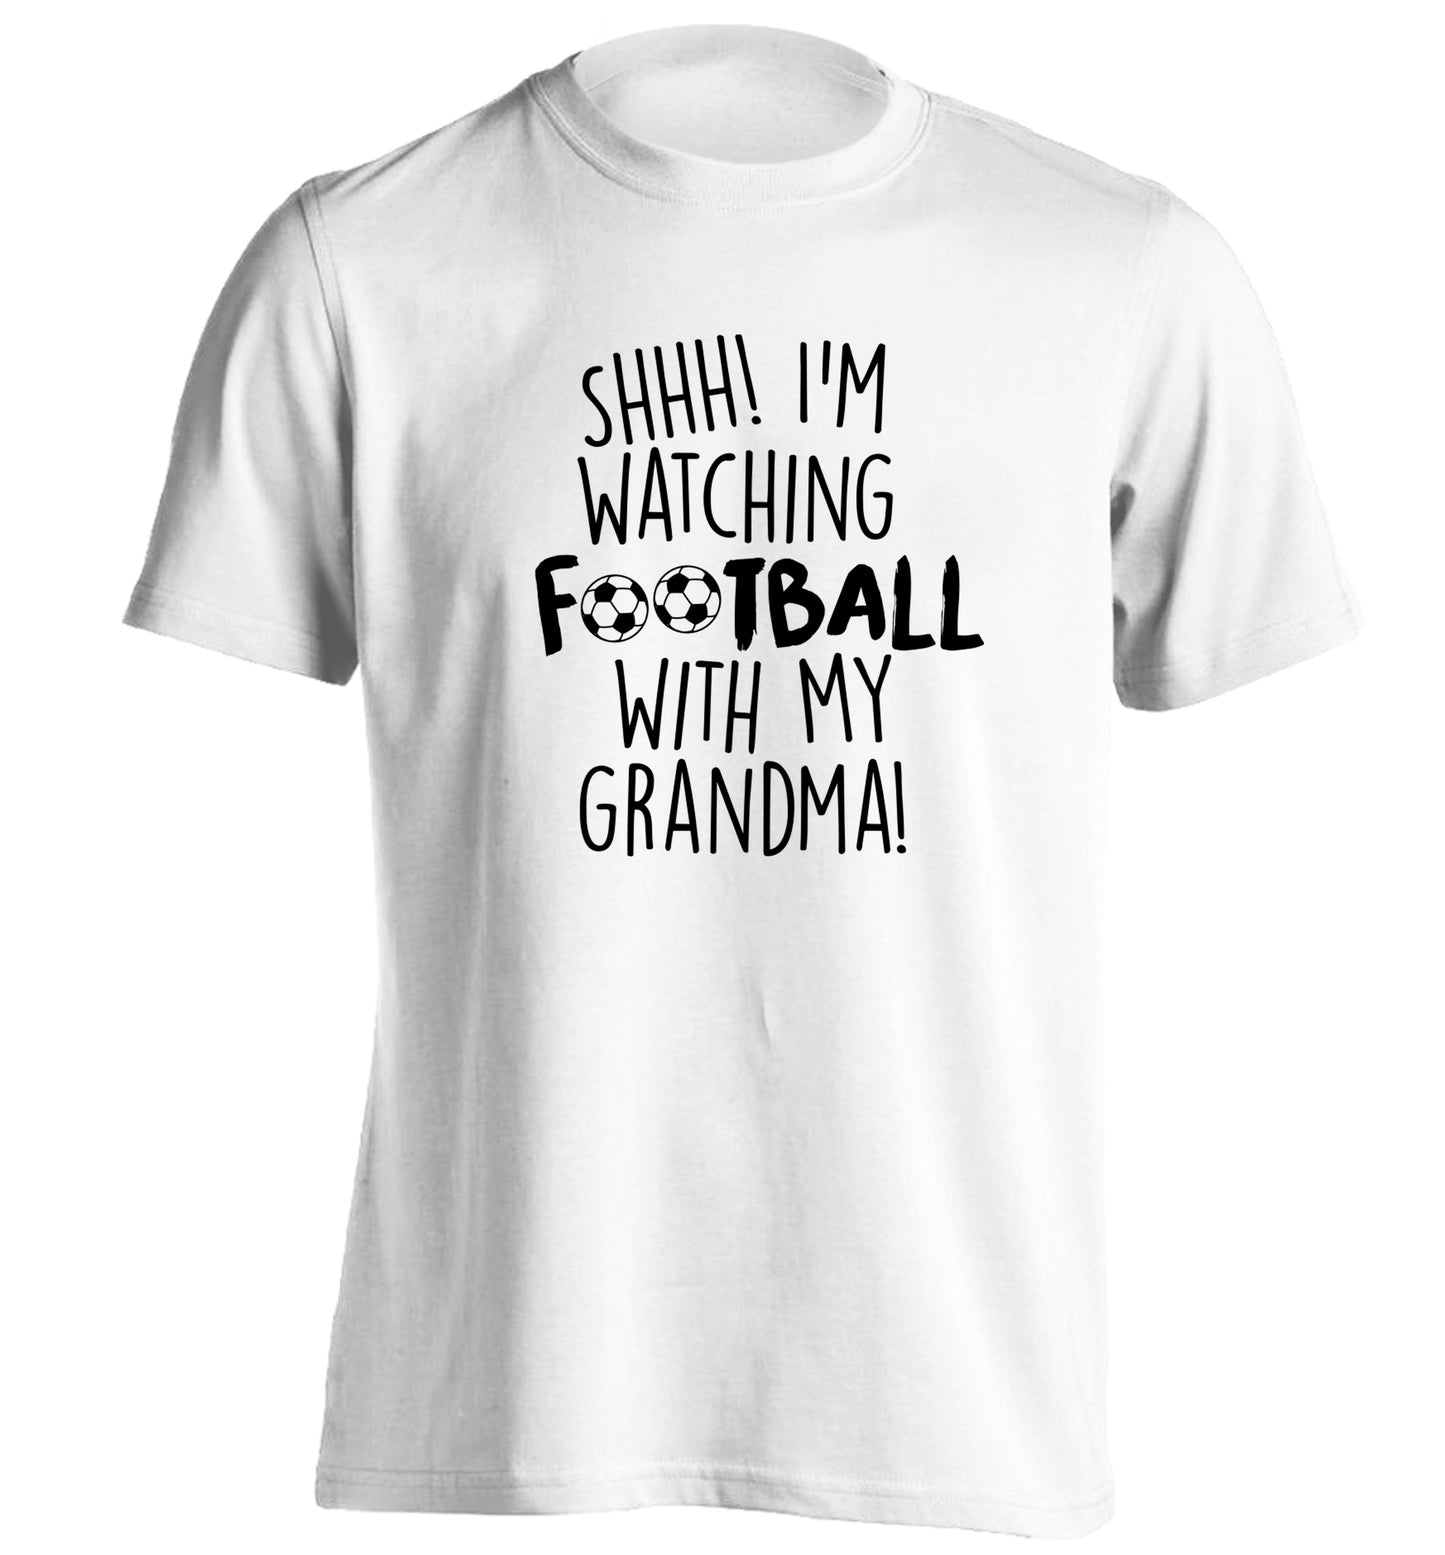 Shhh I'm watching football with my grandma adults unisexwhite Tshirt 2XL